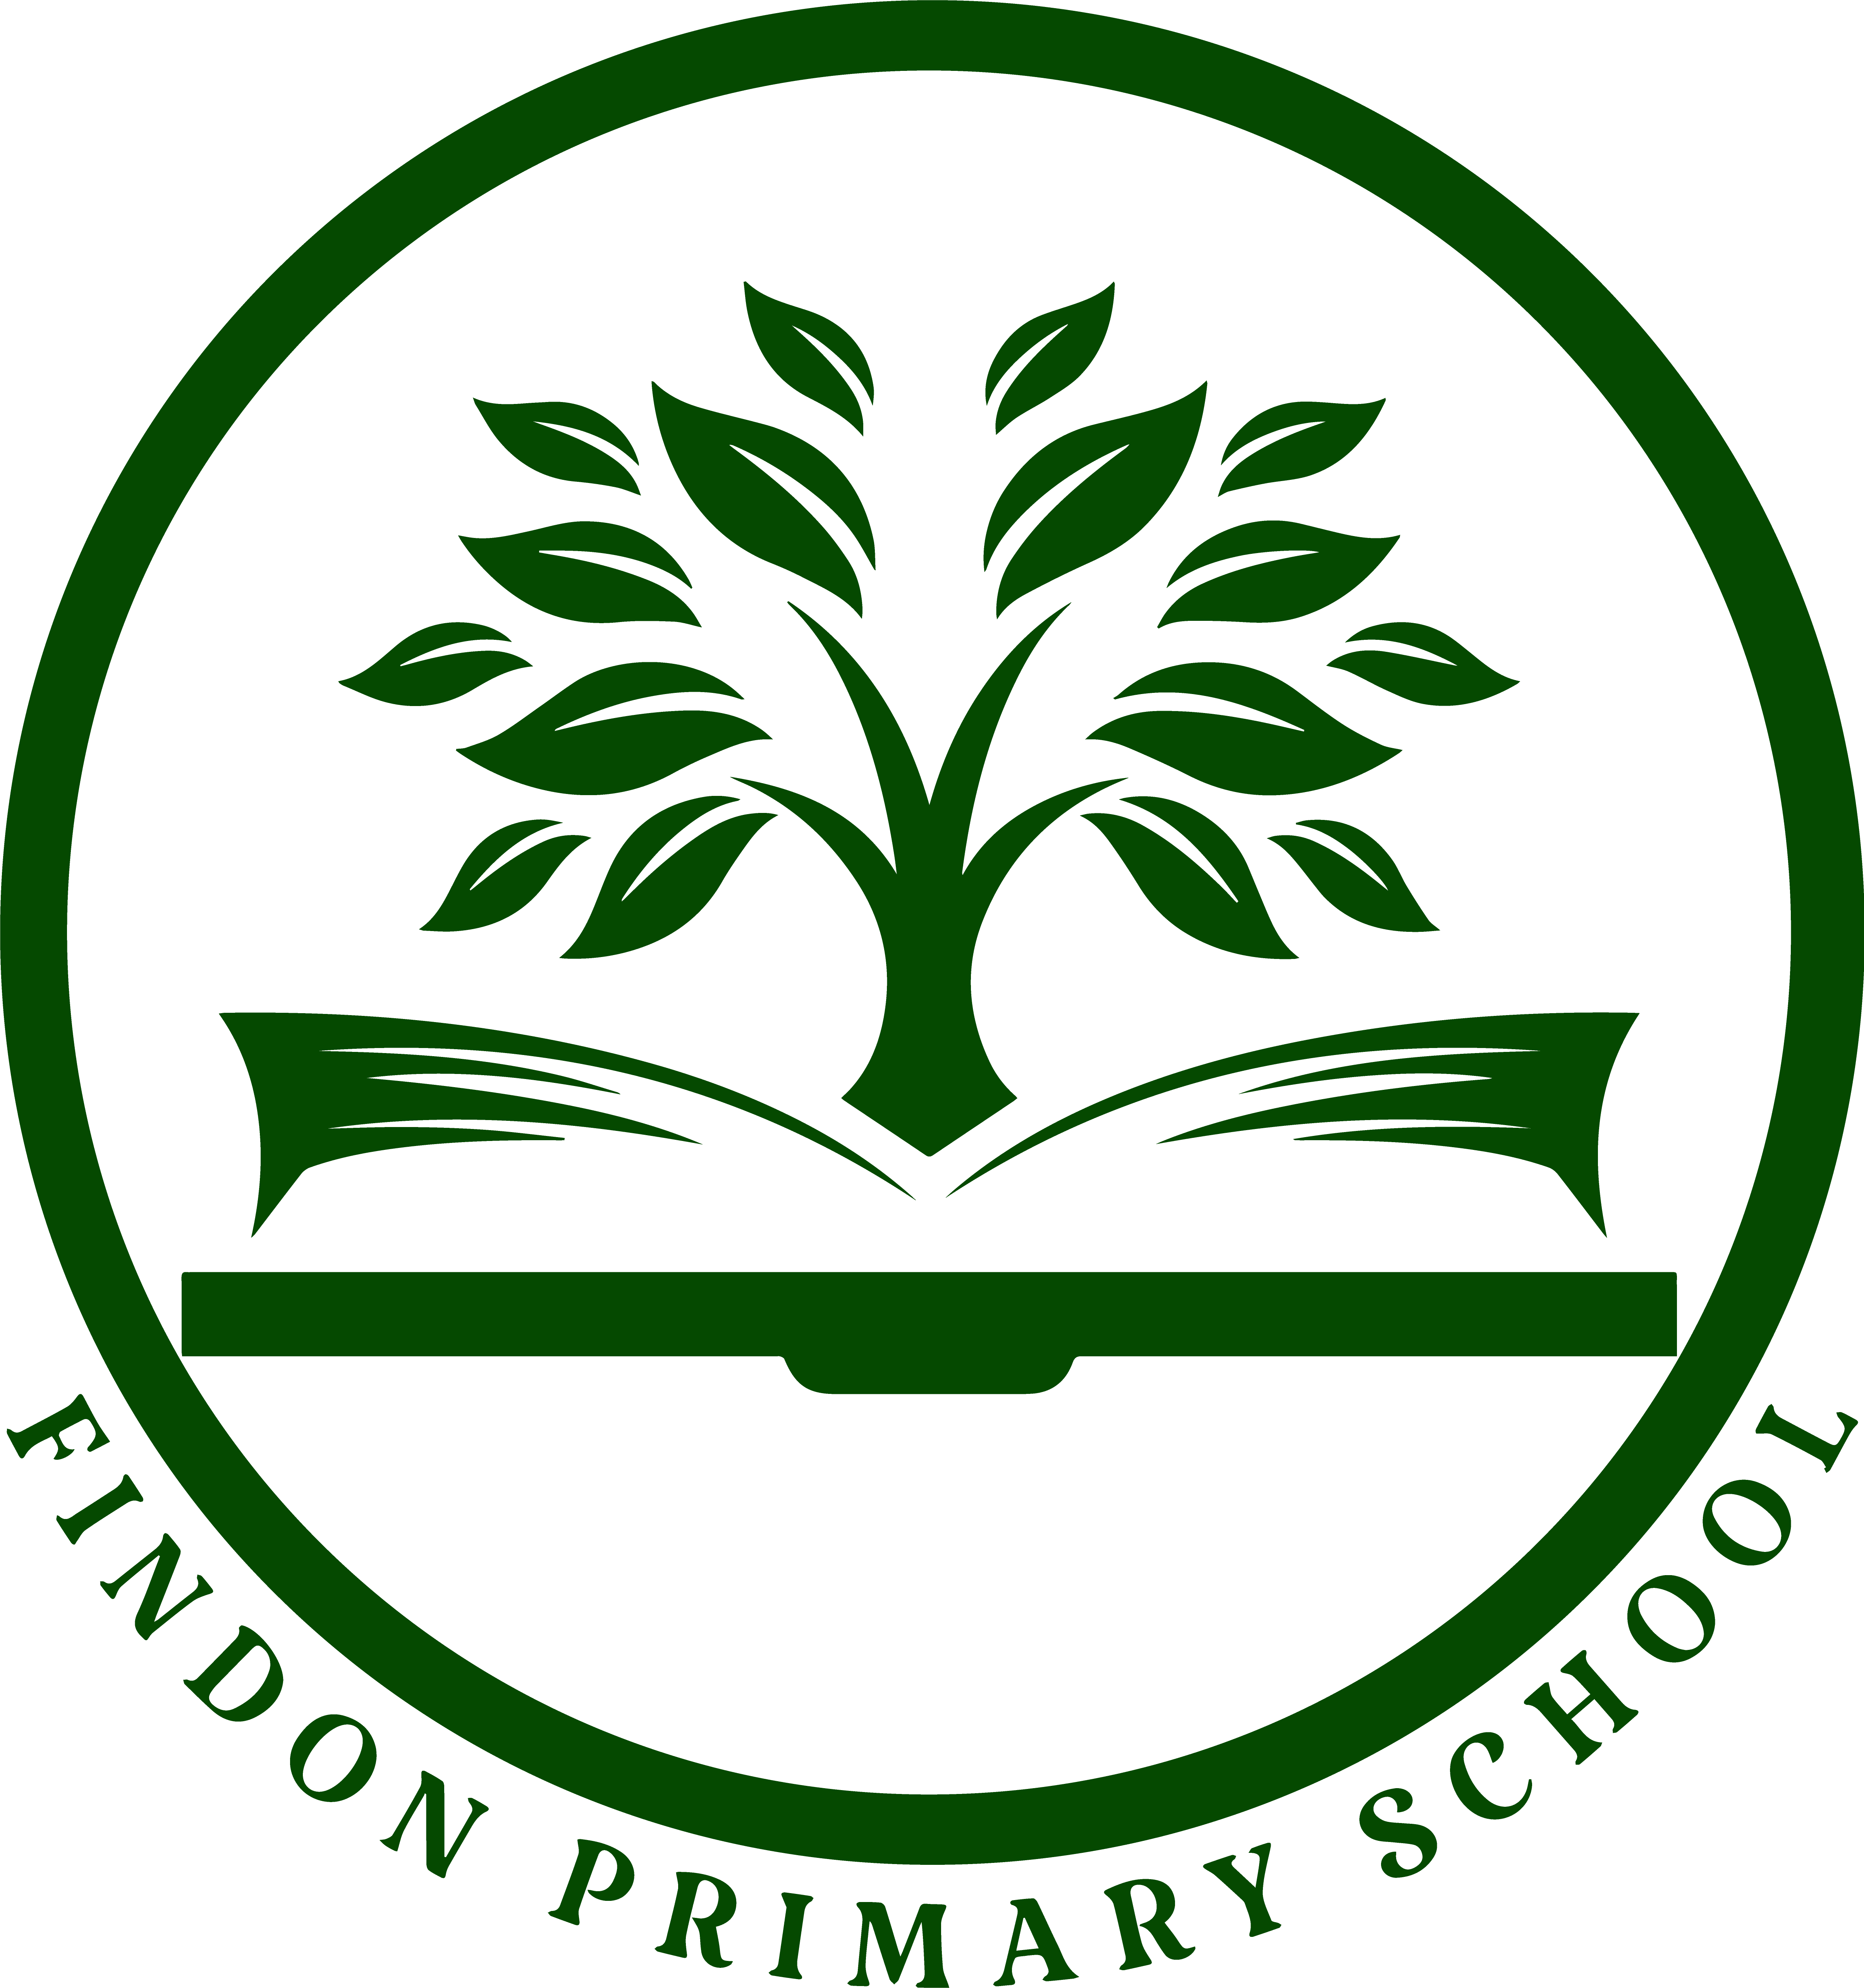 Findon Primary School